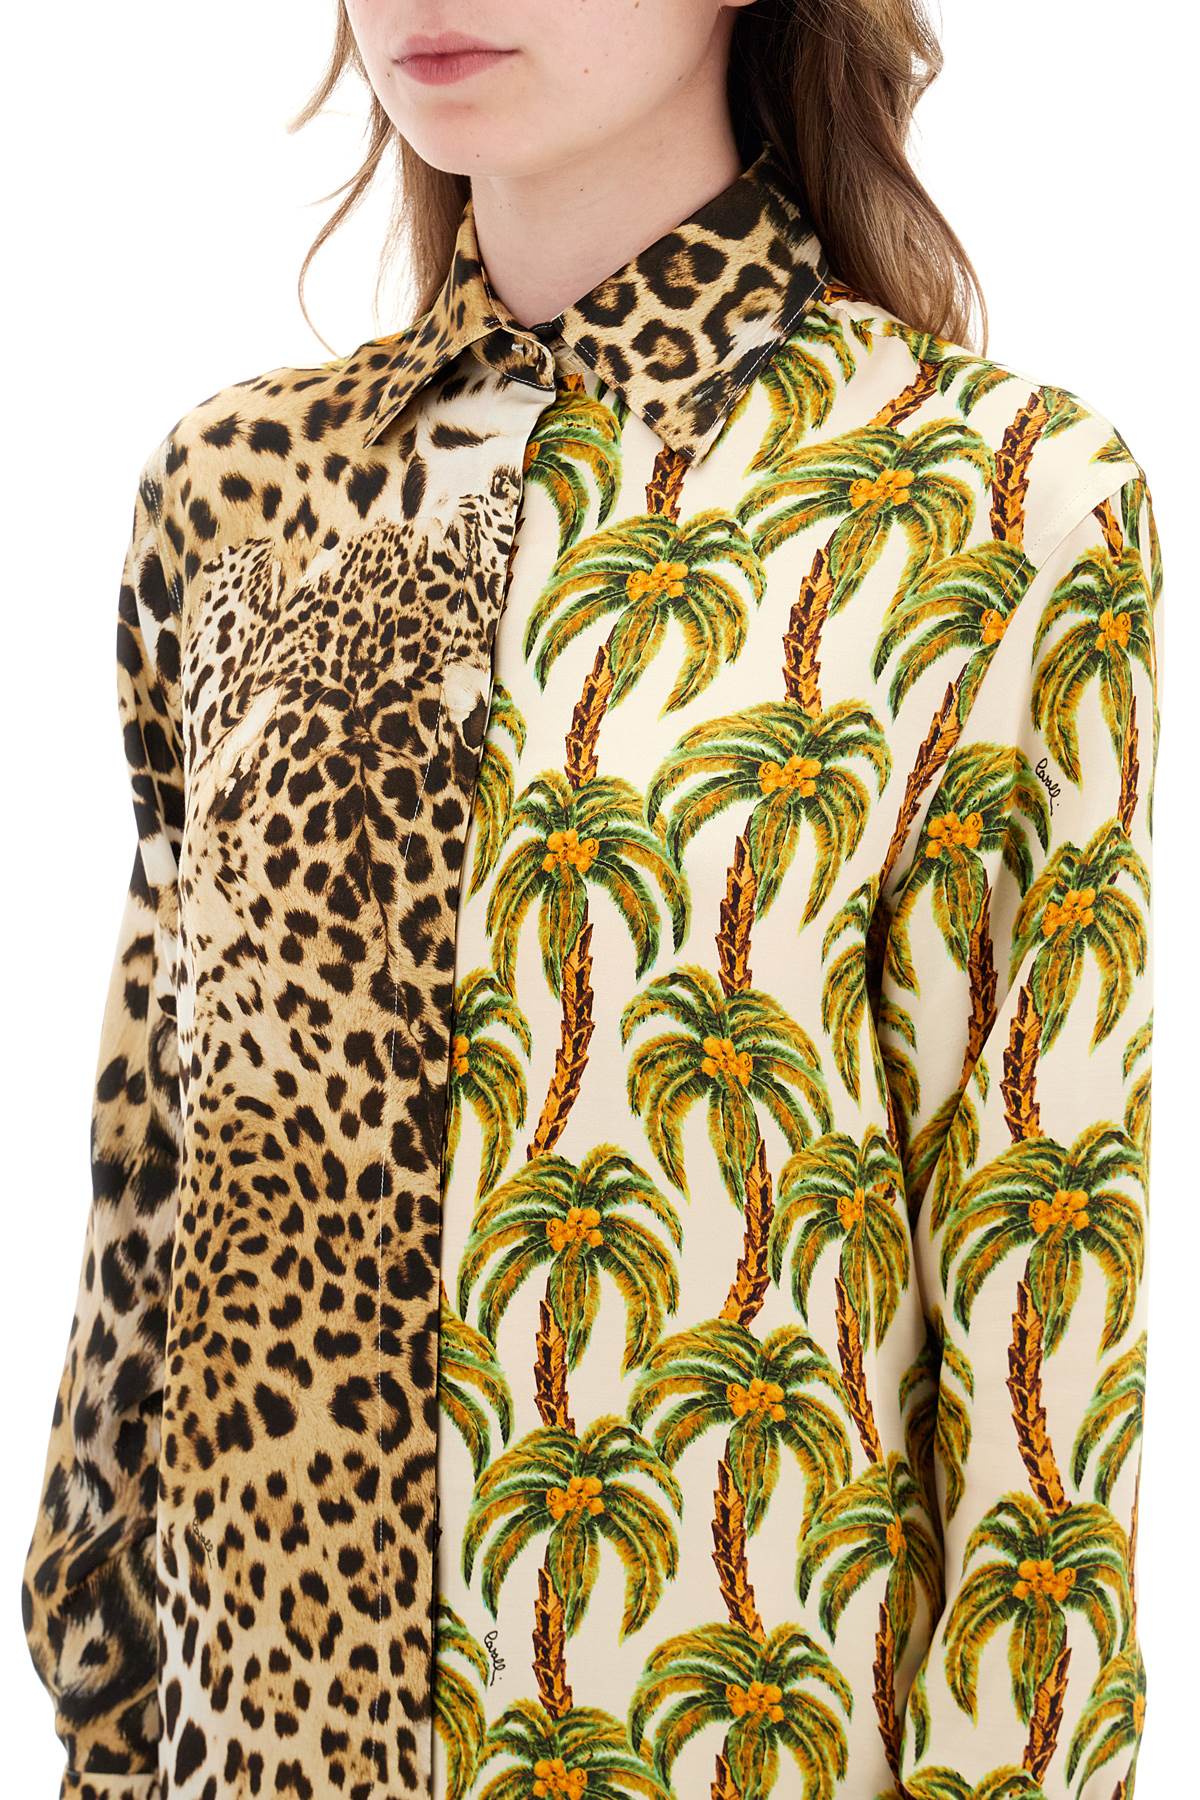 Roberto cavalli jaguar and palm tree printed shirt-3